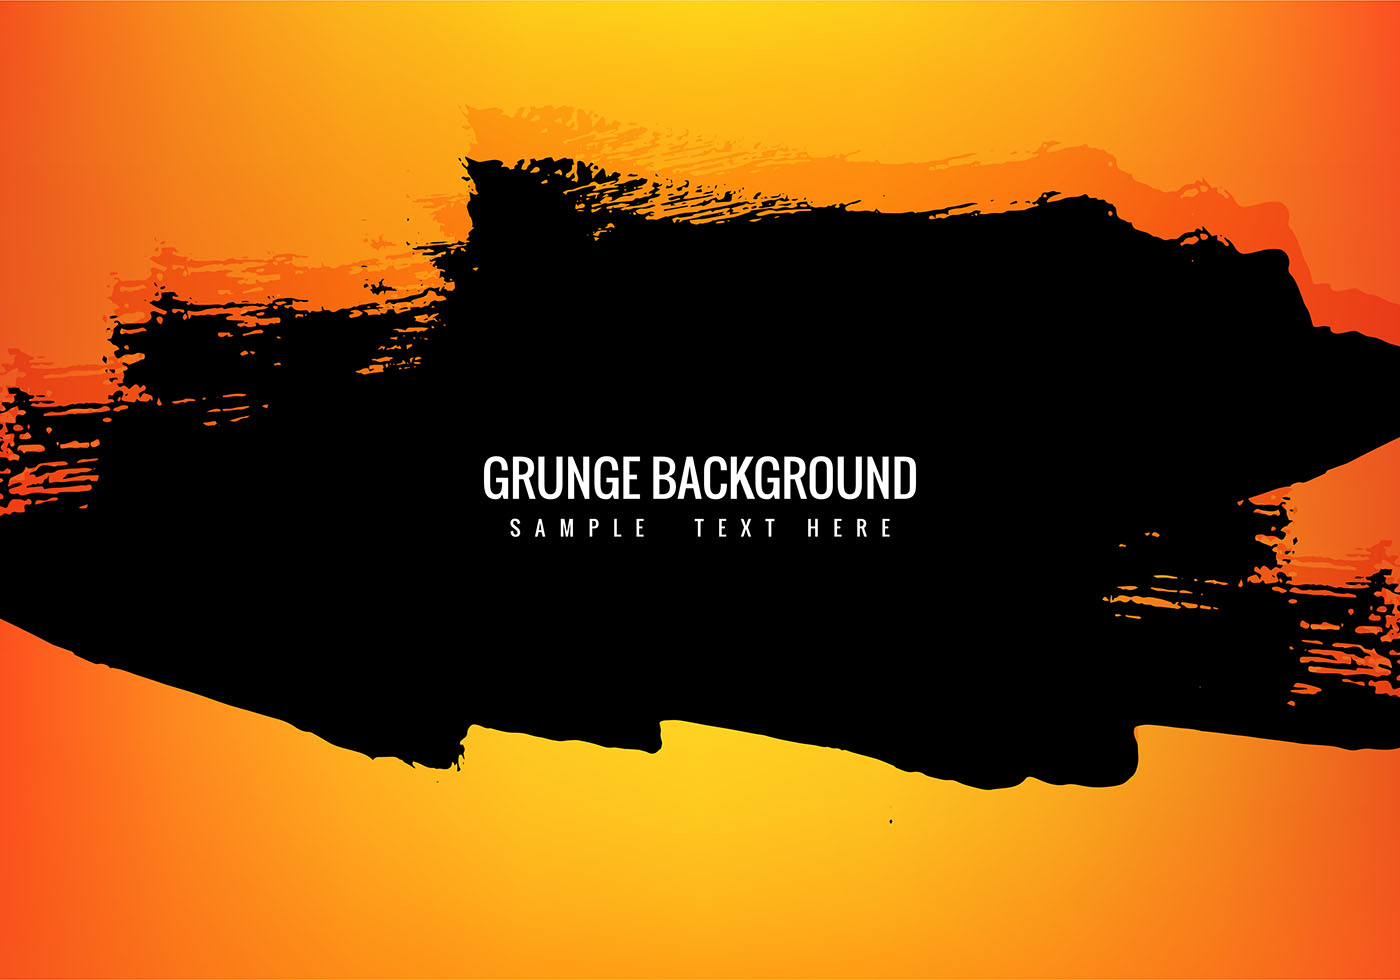 Download Free Vector Grunge Background 118567 - Download Free Vectors, Clipart Graphics & Vector Art